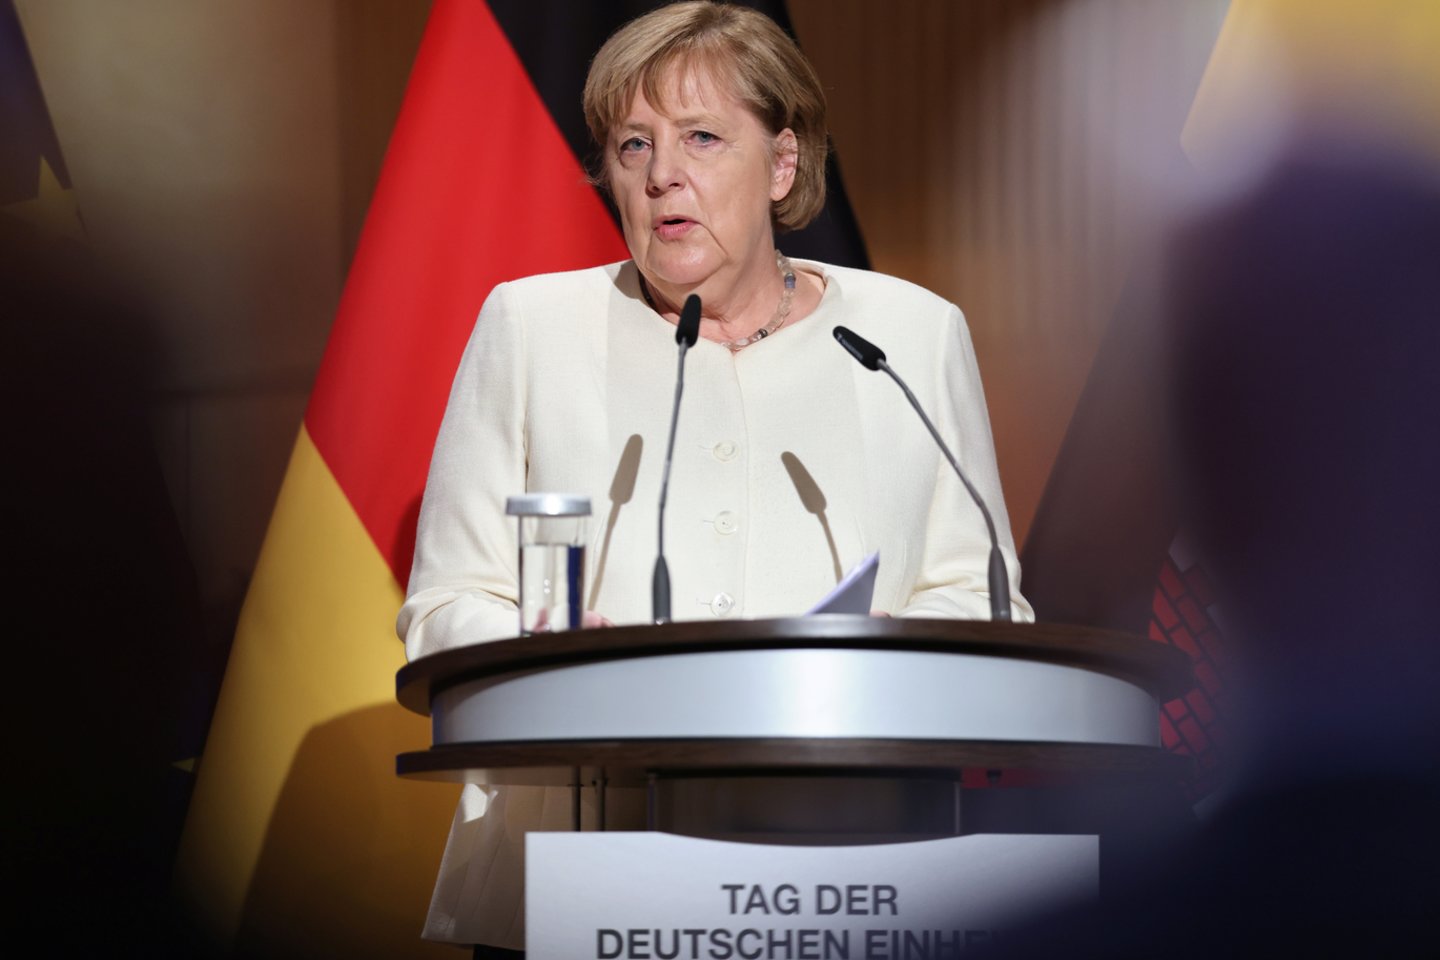  Vokietijoje prasidėjus sunkioms koalicinėms deryboms, A. Merkel ragina ieškoti kompromiso.  <br> Reuters/Scanpix nuotr.